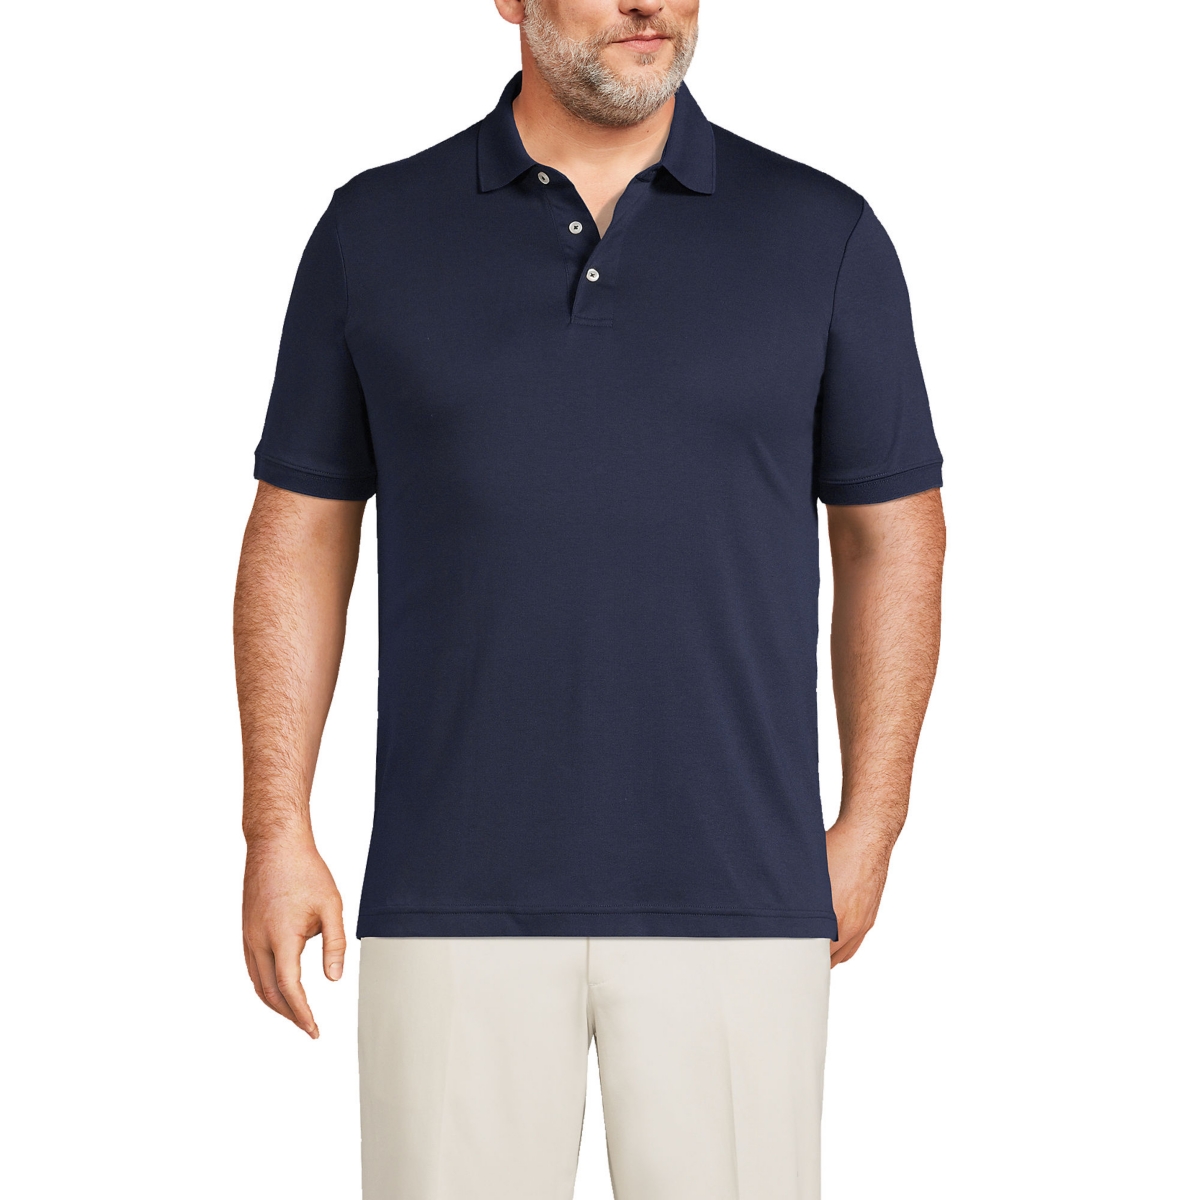 Big & Tall Short Sleeve Cotton Supima Polo Shirt - Radiant navy